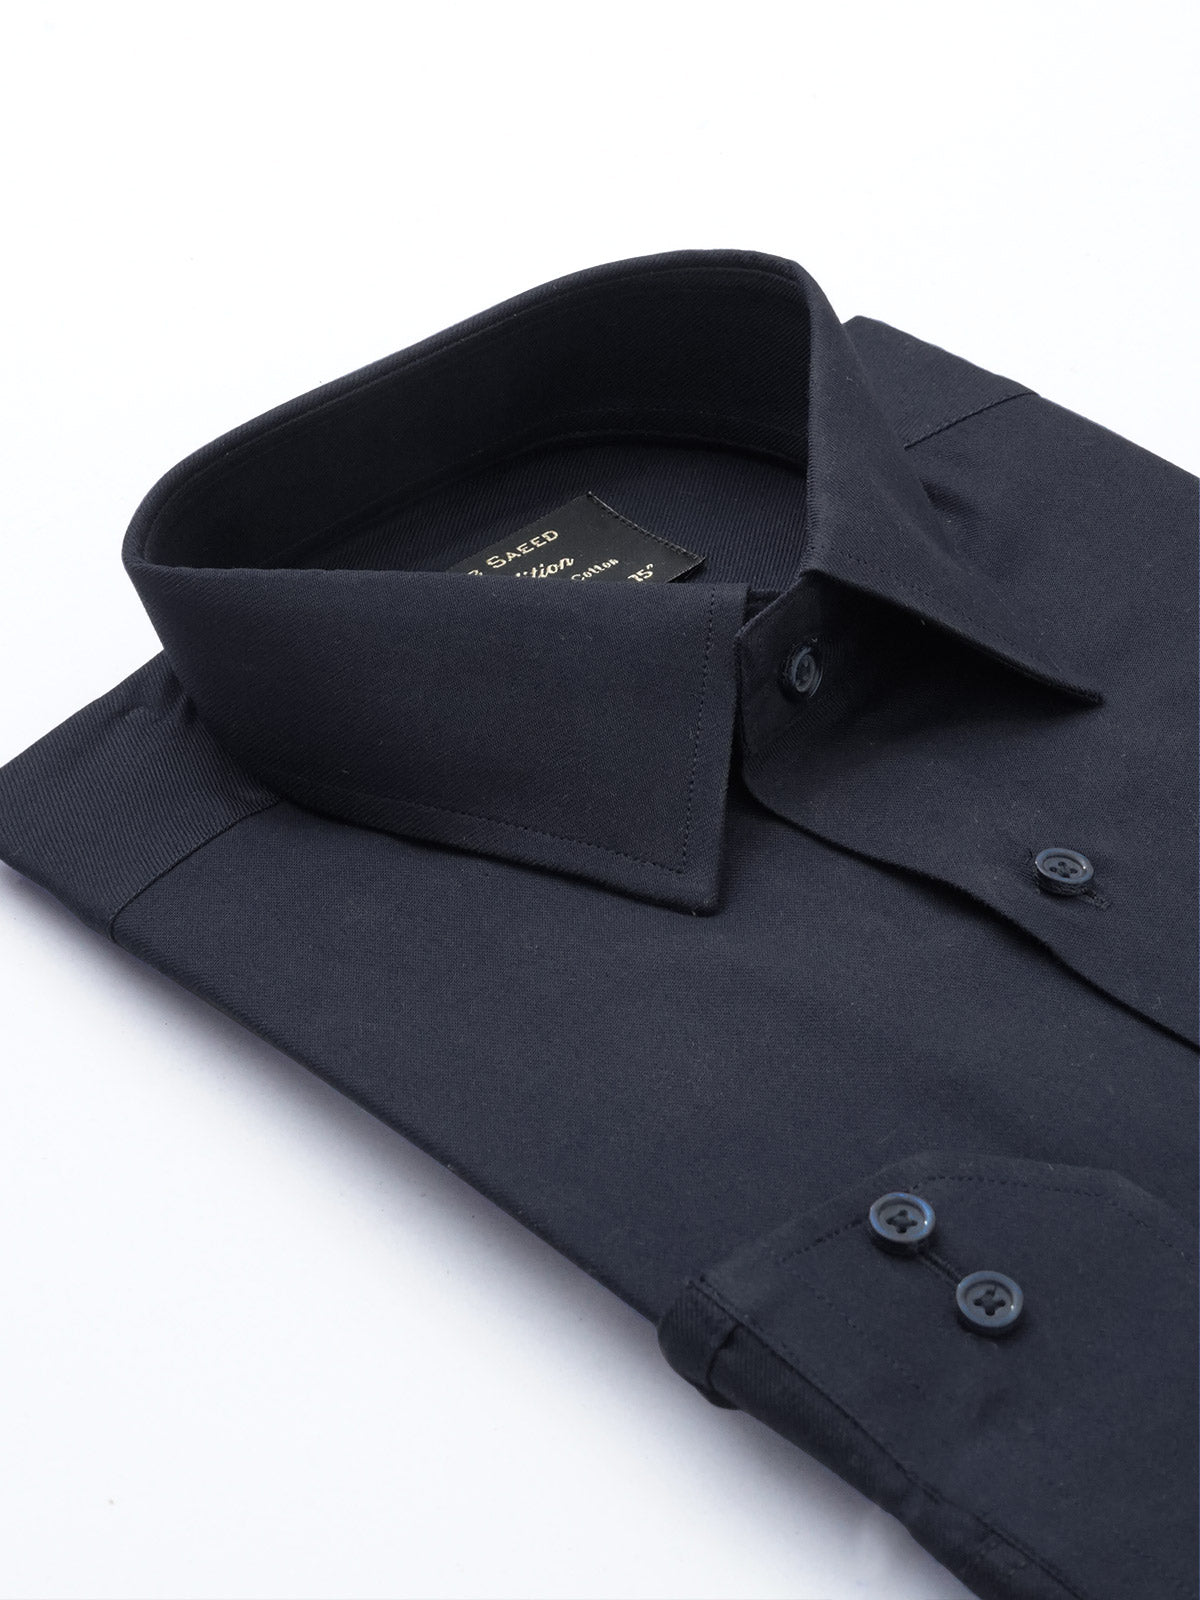 Navy Blue Plain, Elite Edition, French Collar Men’s Formal Shirt (FS-688)